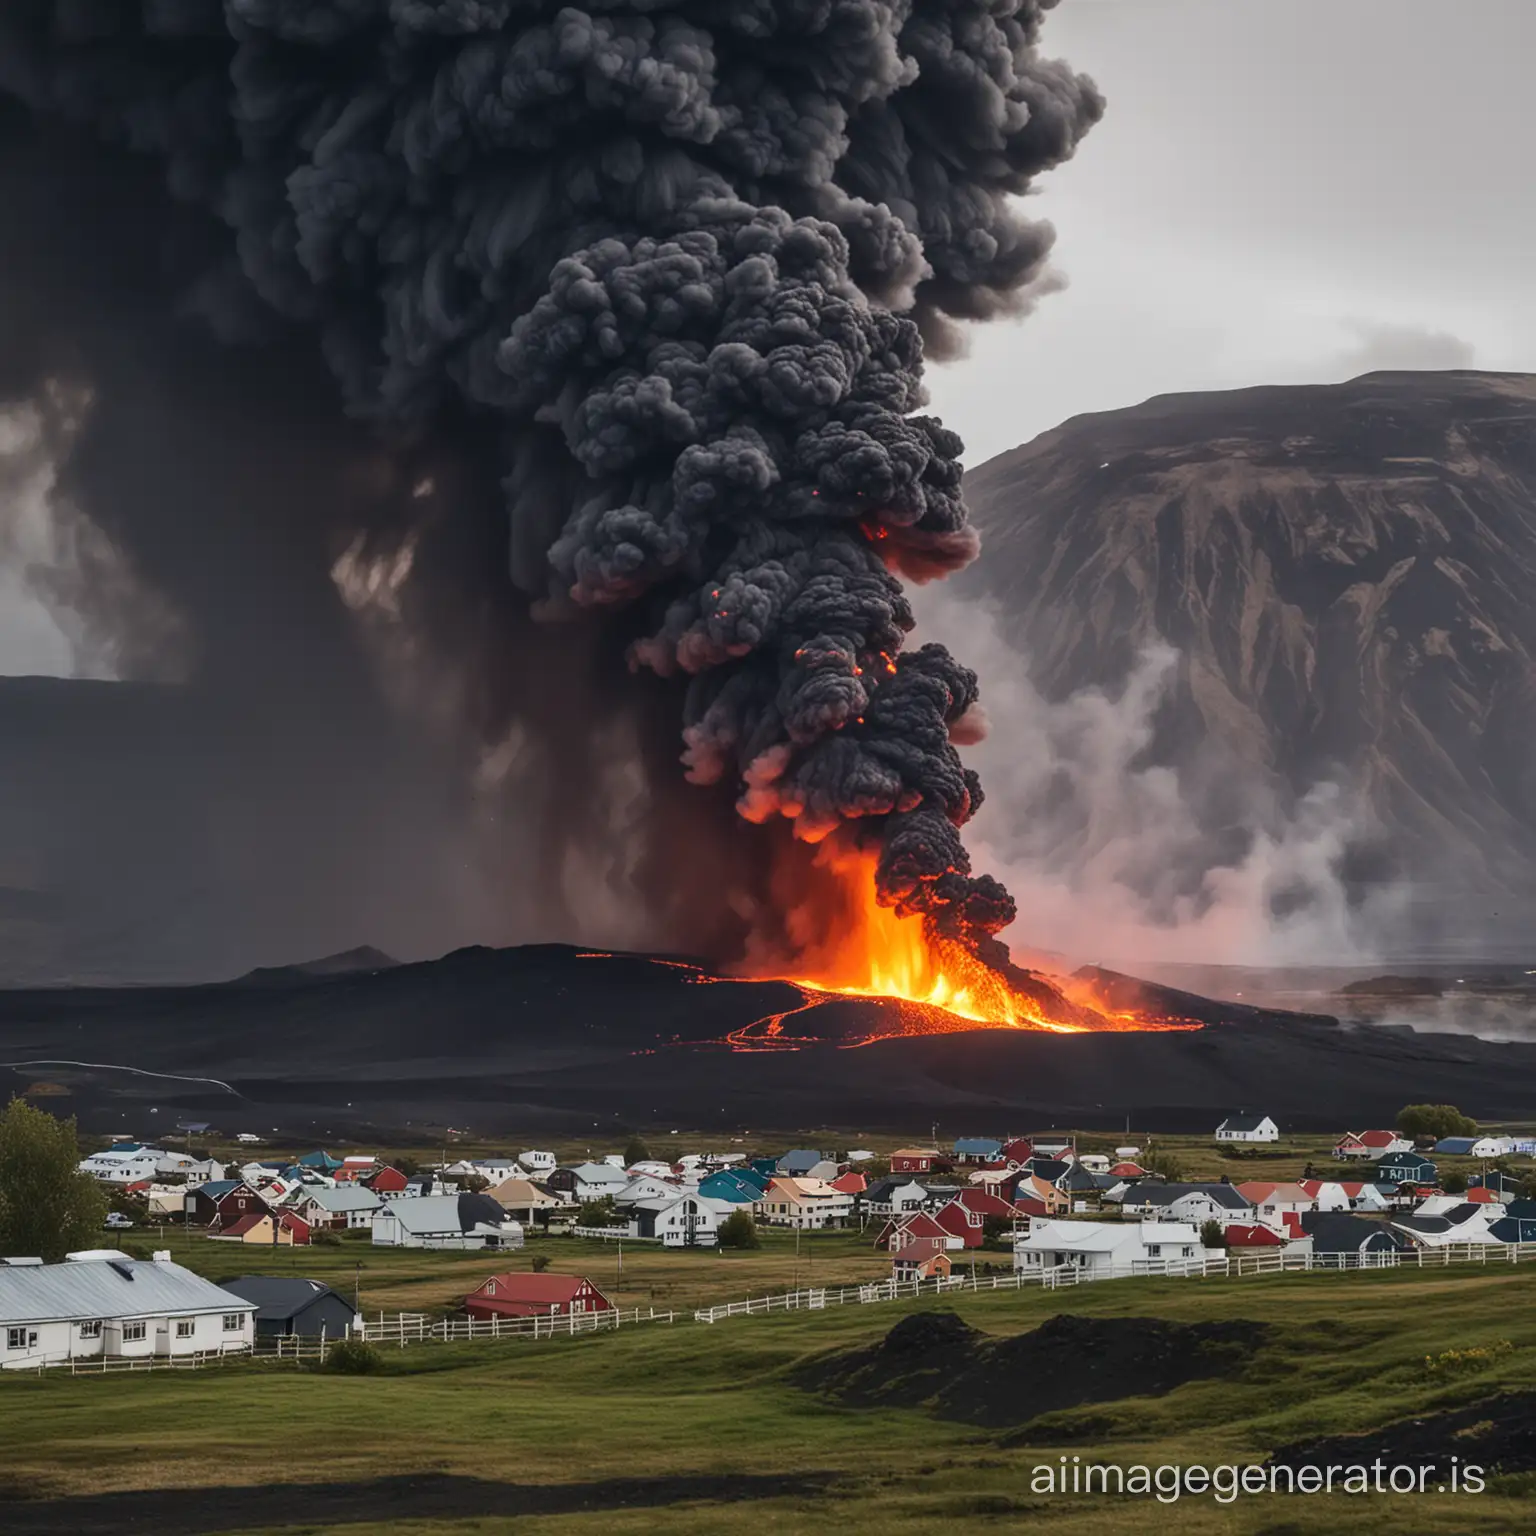 A volcanic eruption in an Icelandic village